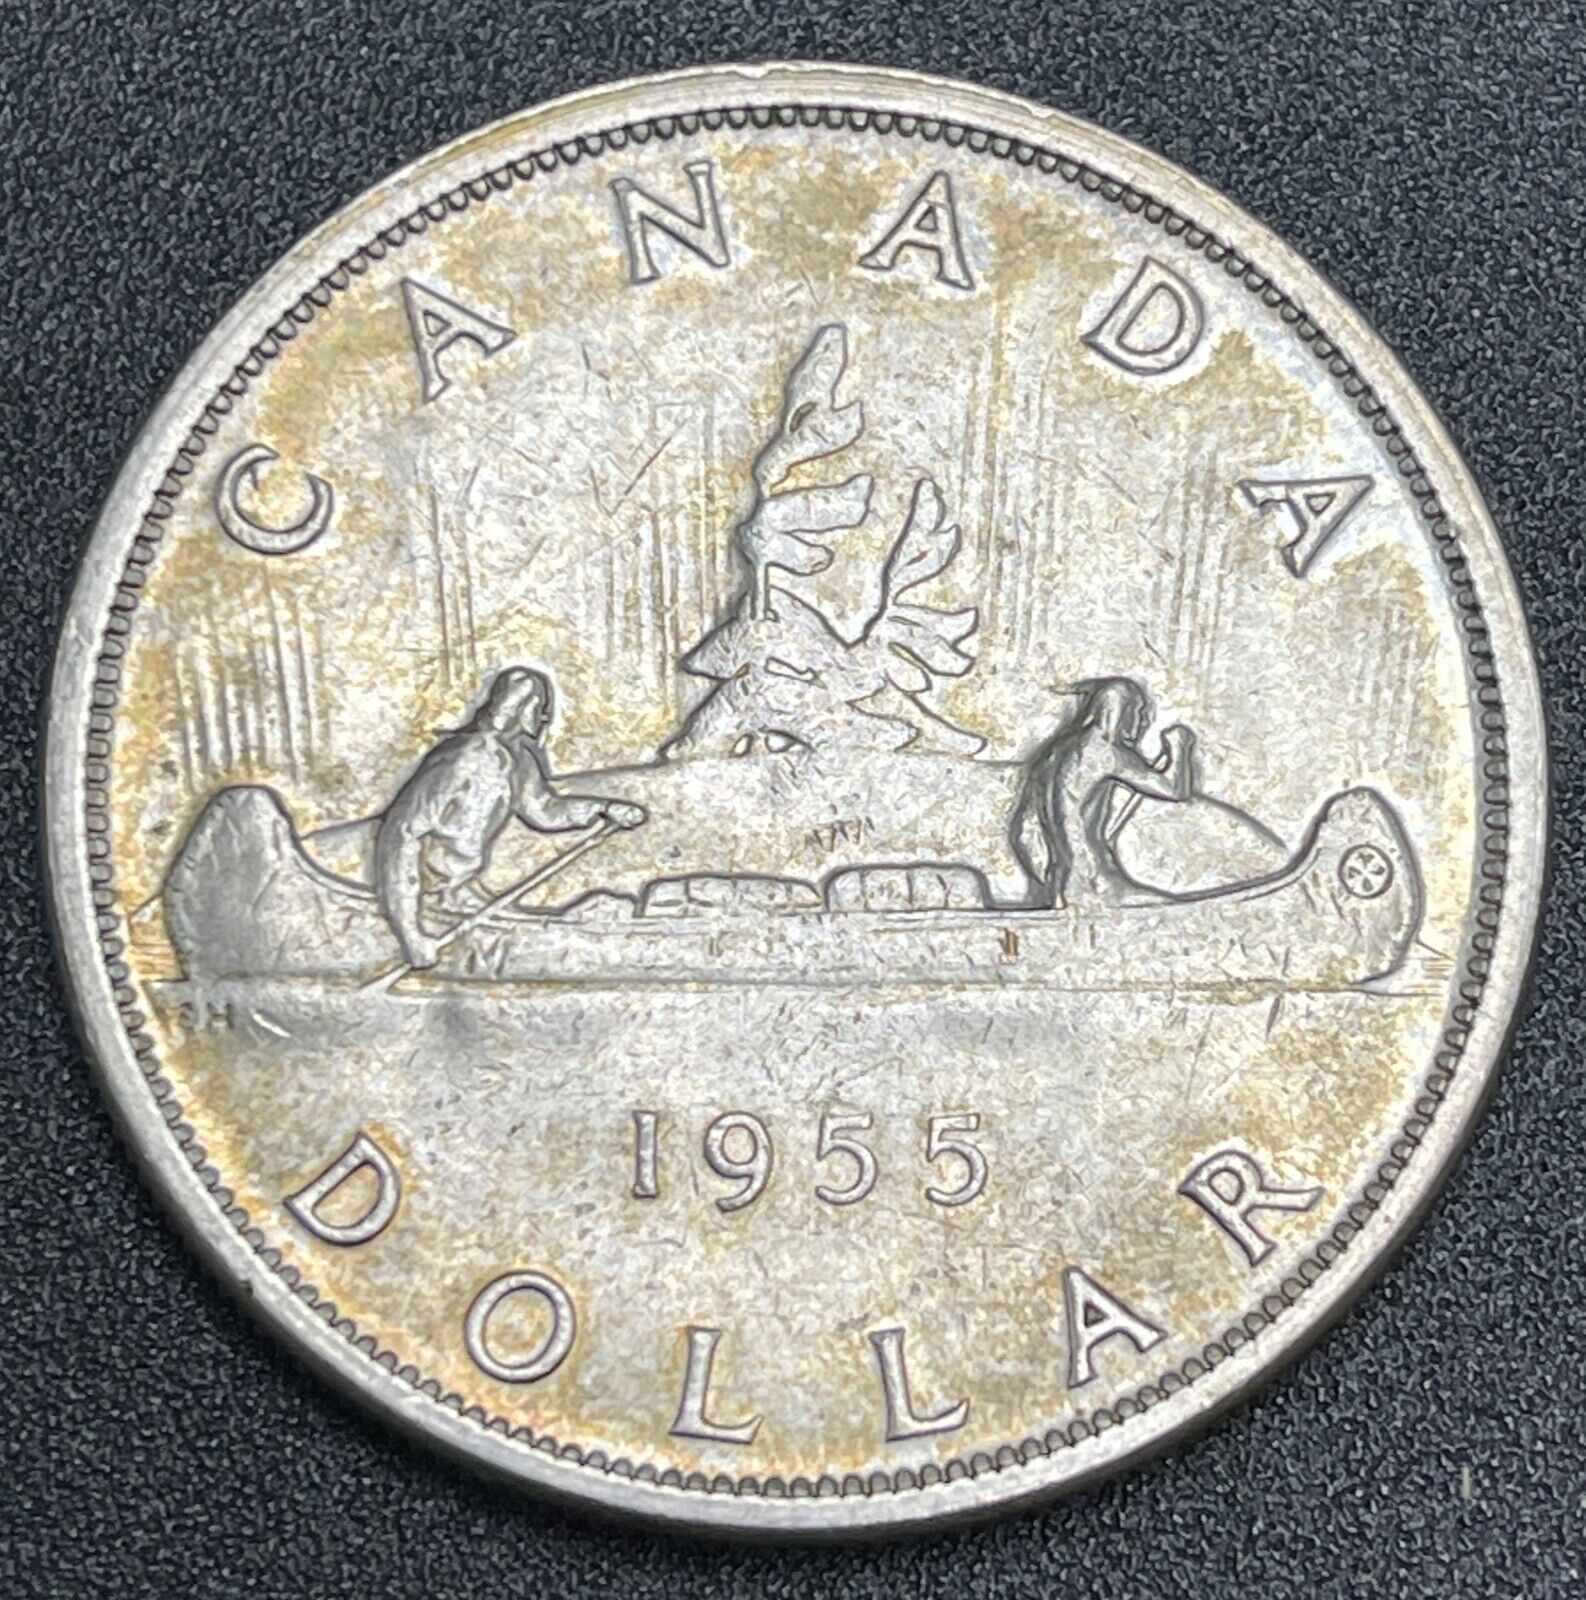 1955 Canada Silver Dollar - No Reserve Sale